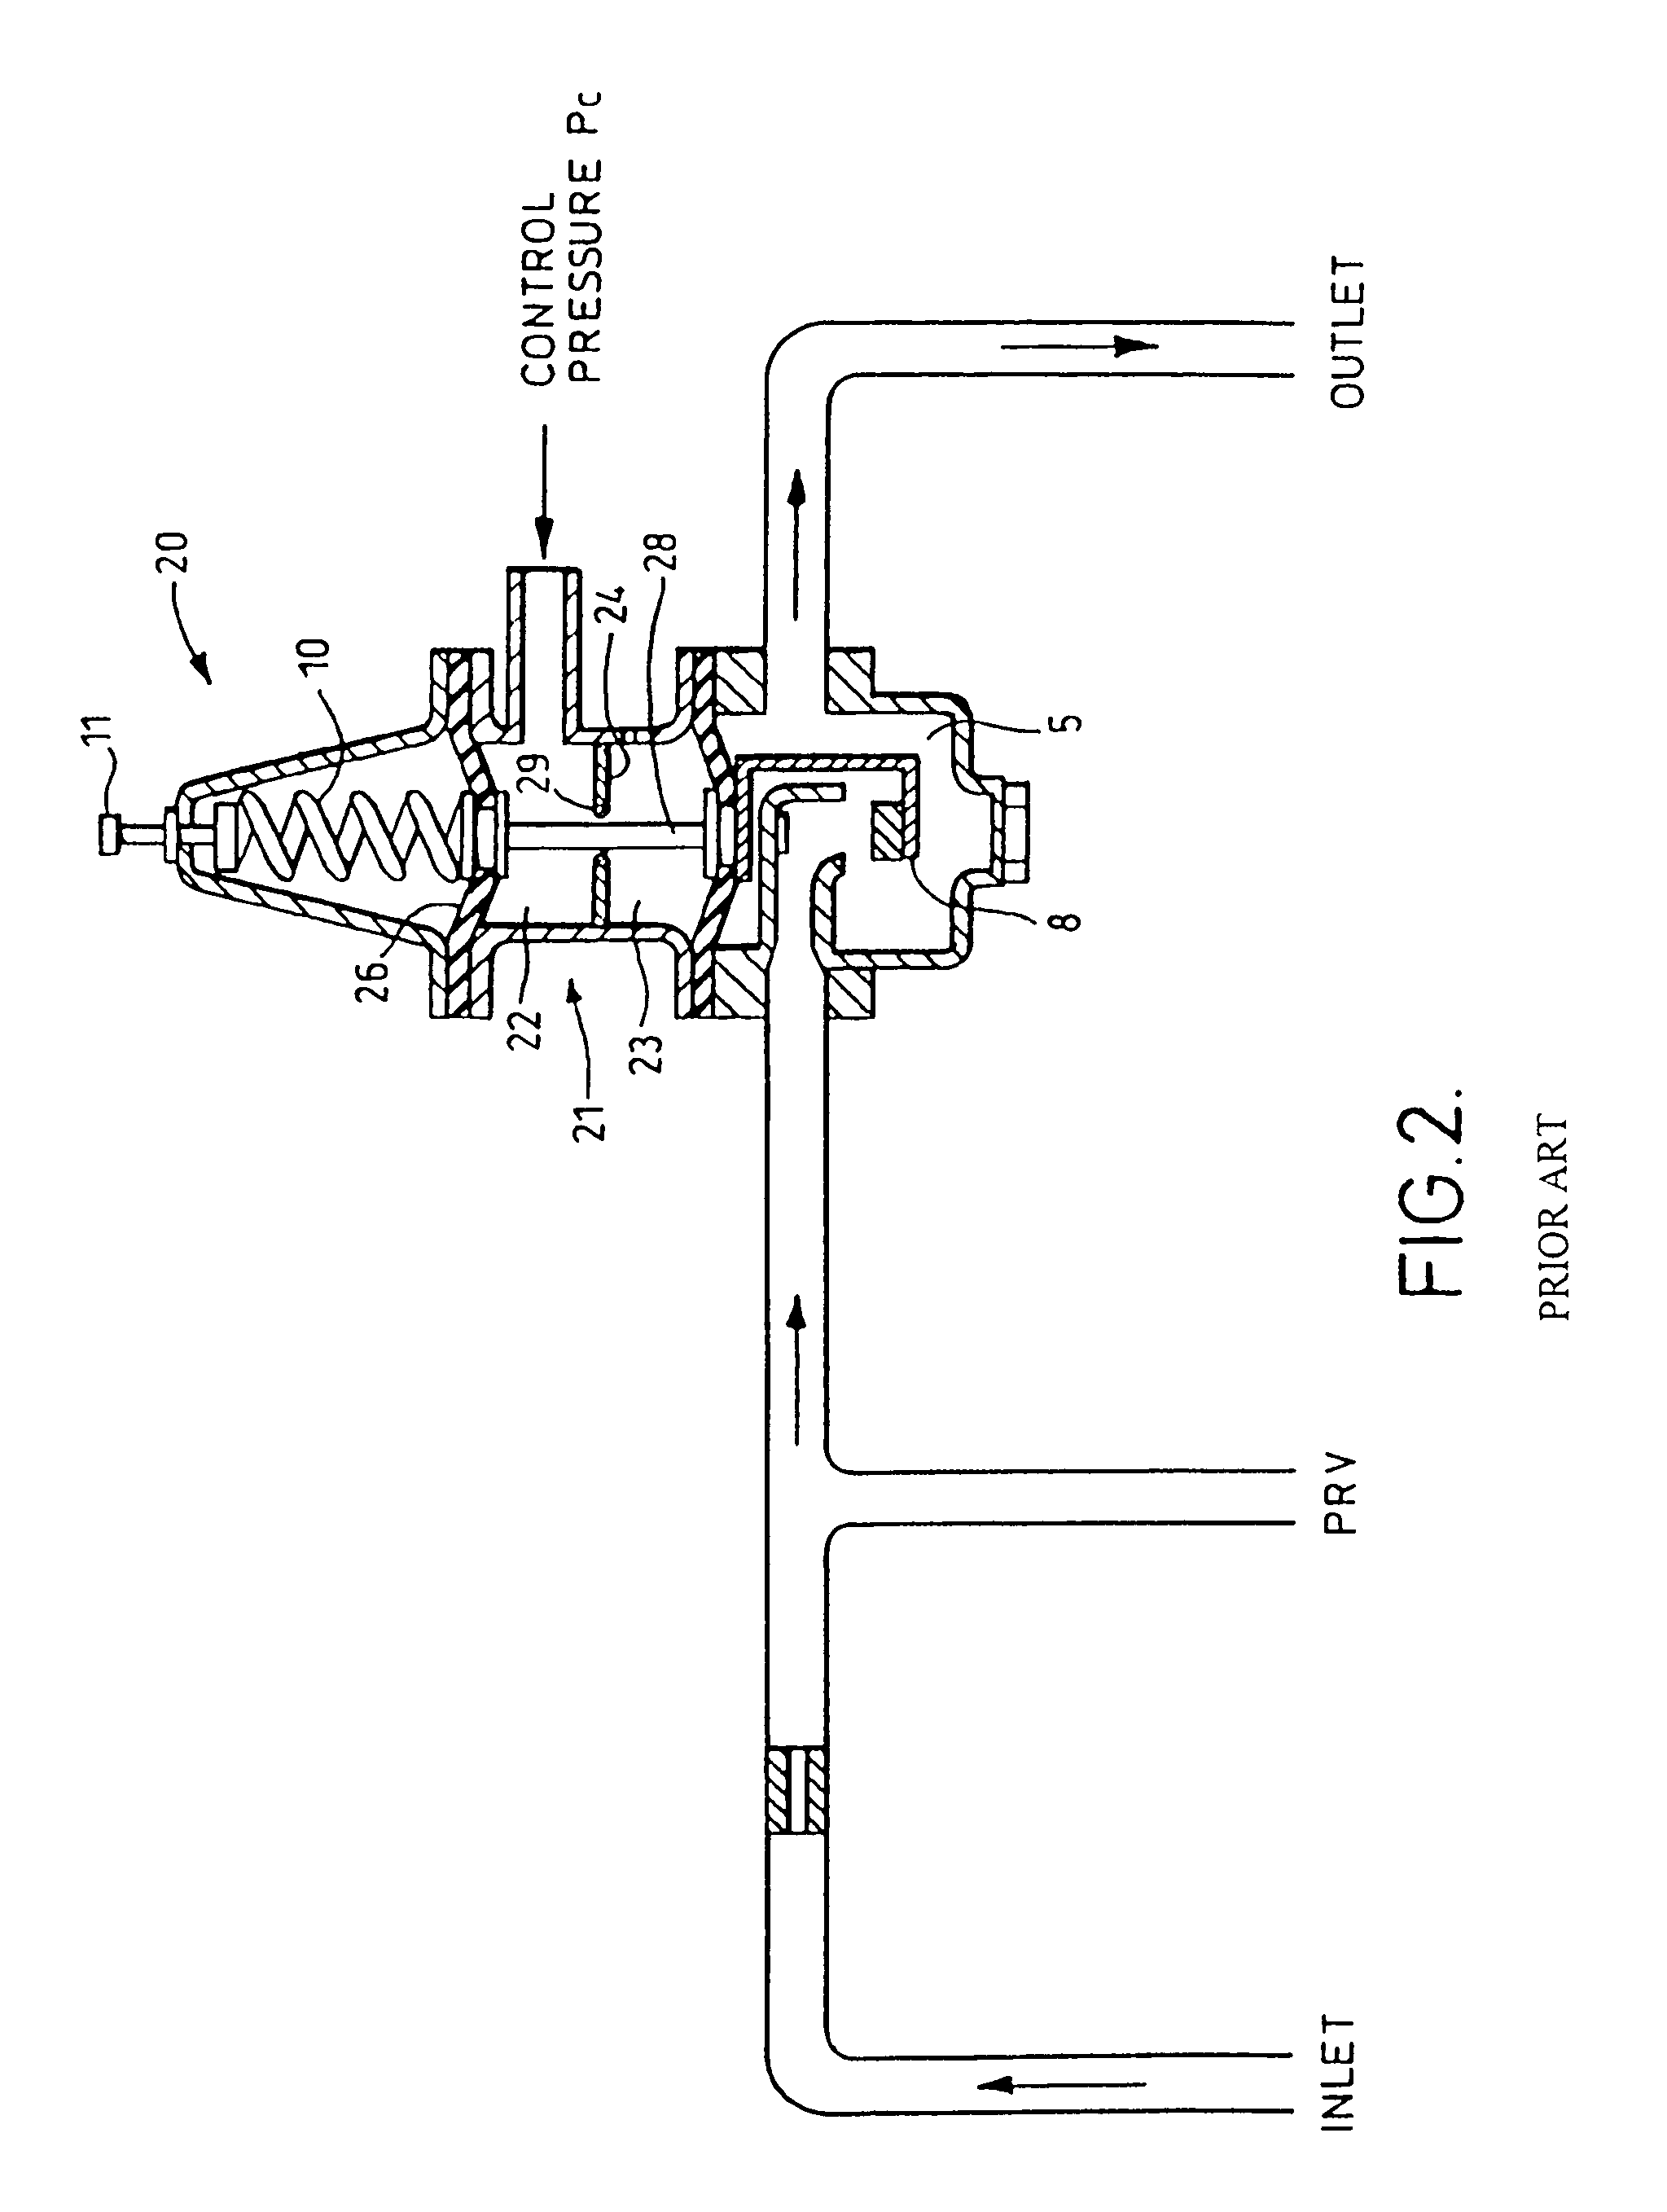 Pilot valve